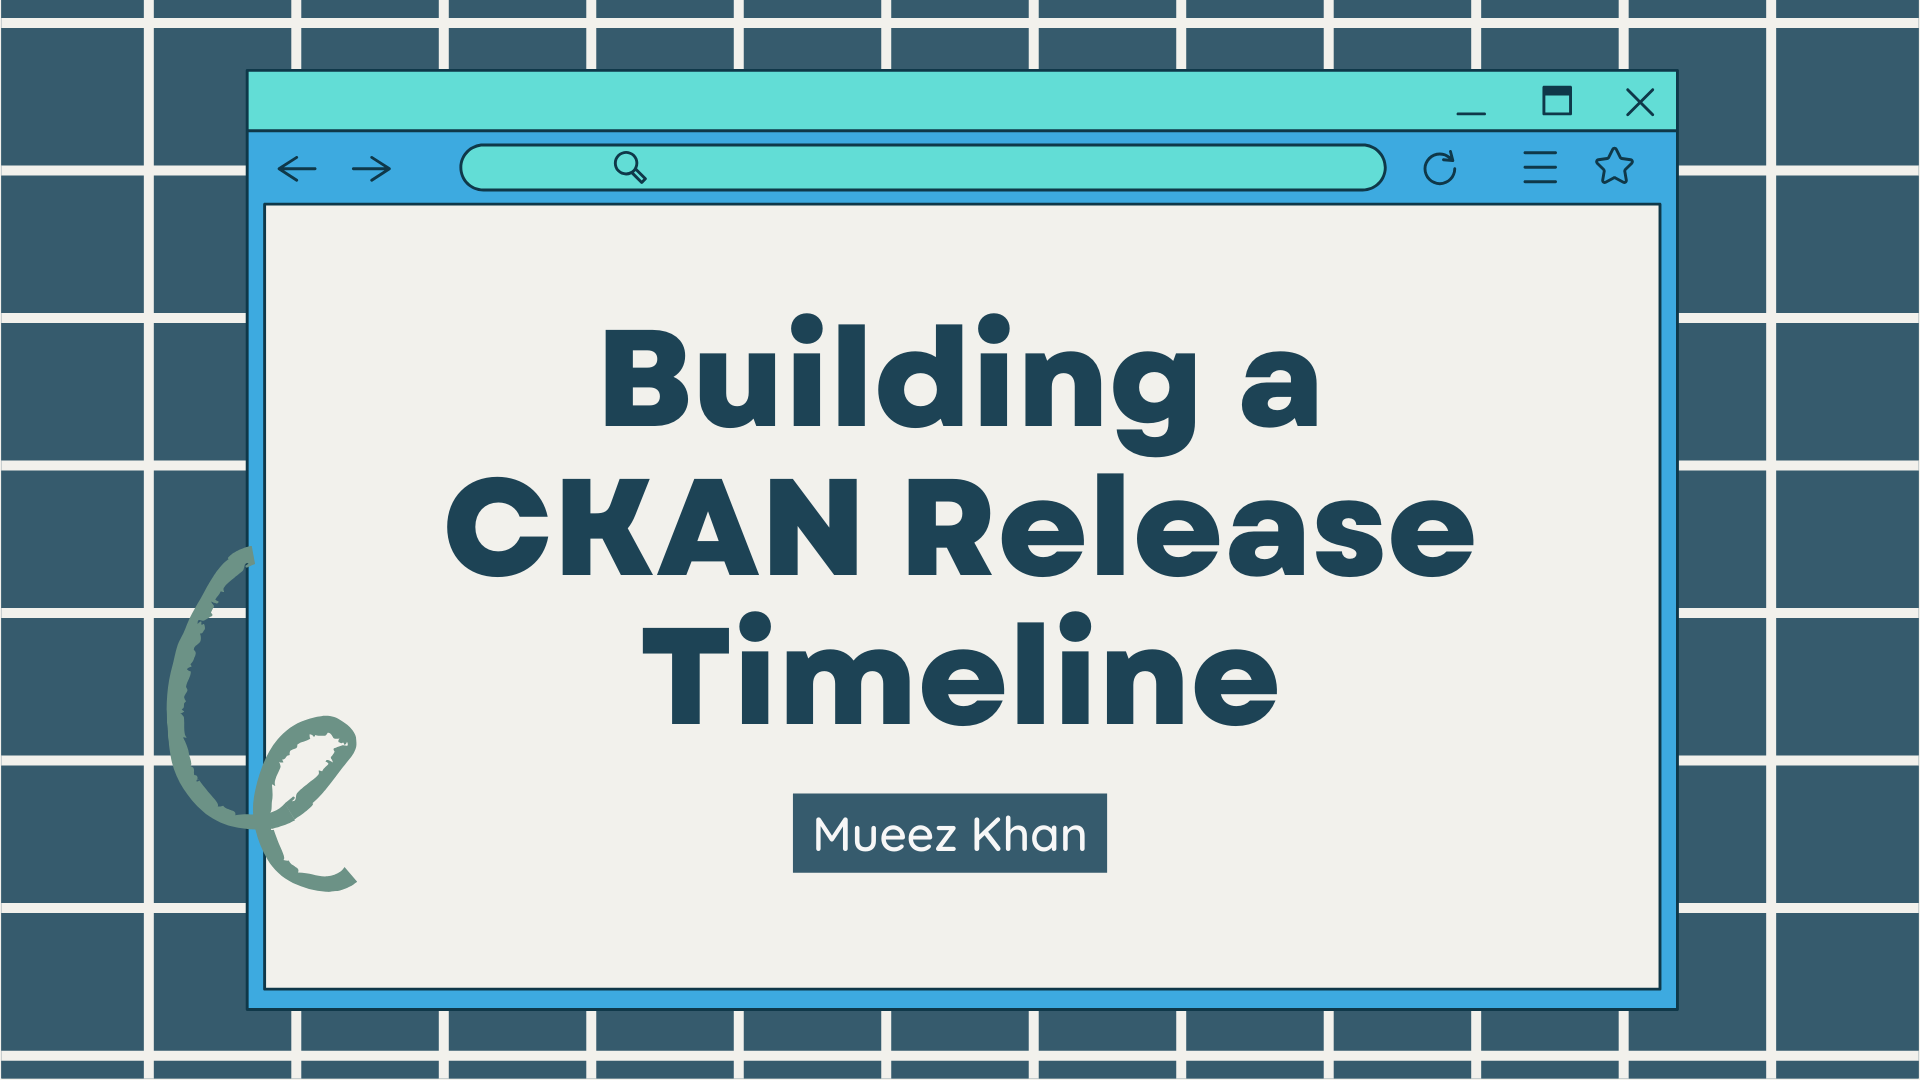 Building a CKAN Release Timeline